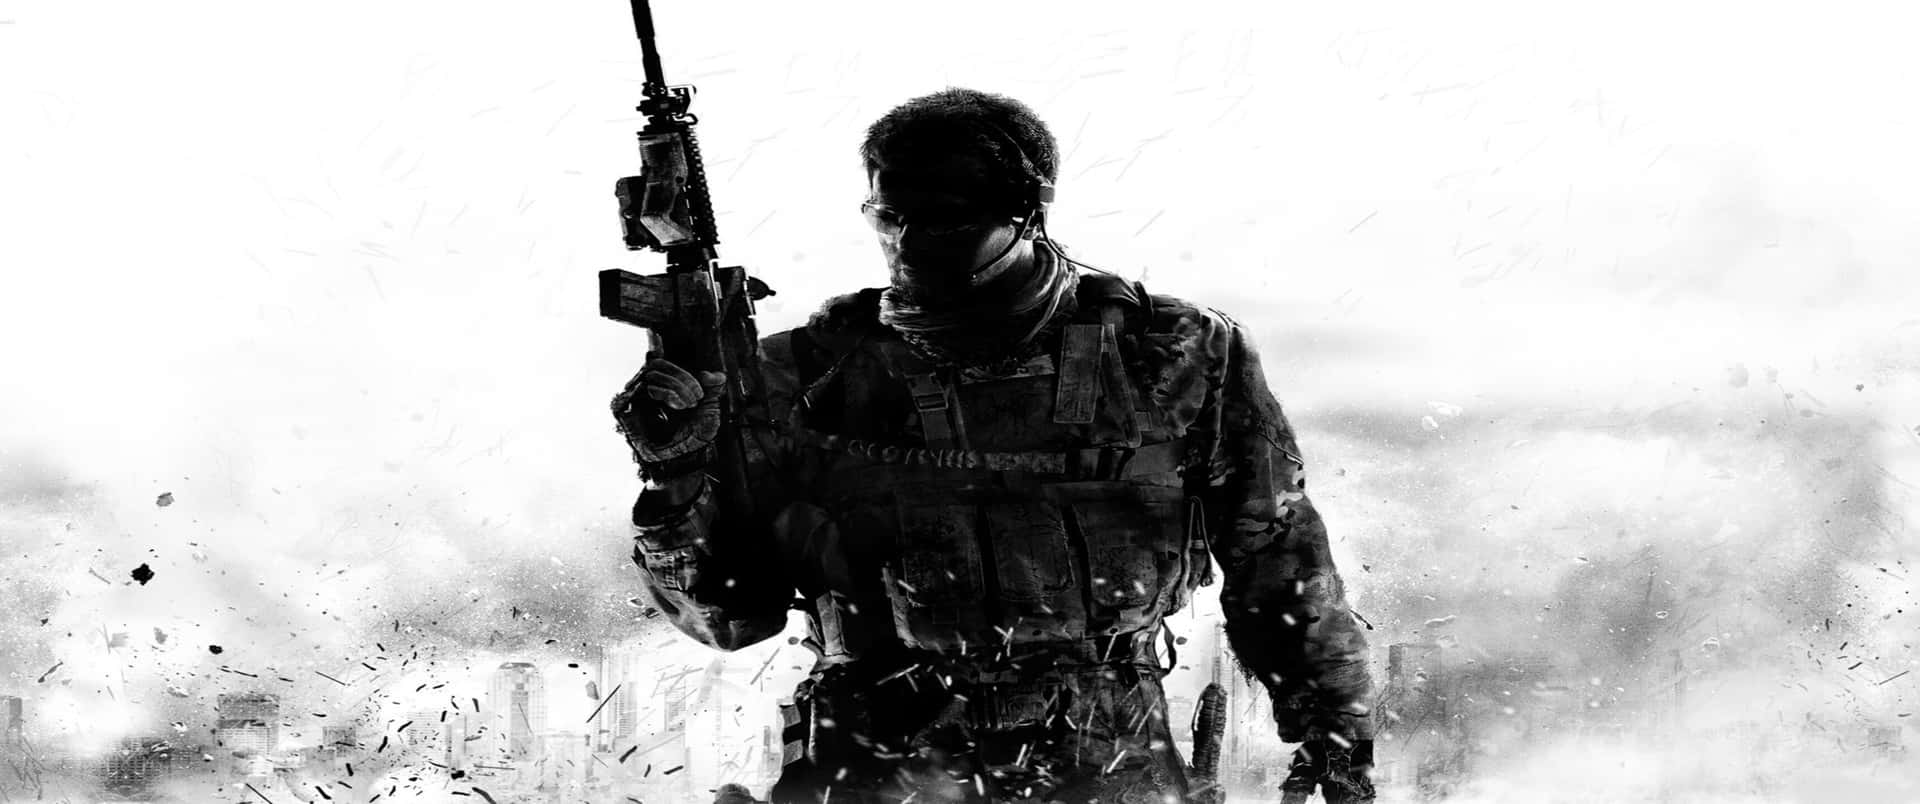 caption: Epic Gameplay - Call of Duty: Modern Warfare 3440x1440p Wallpaper